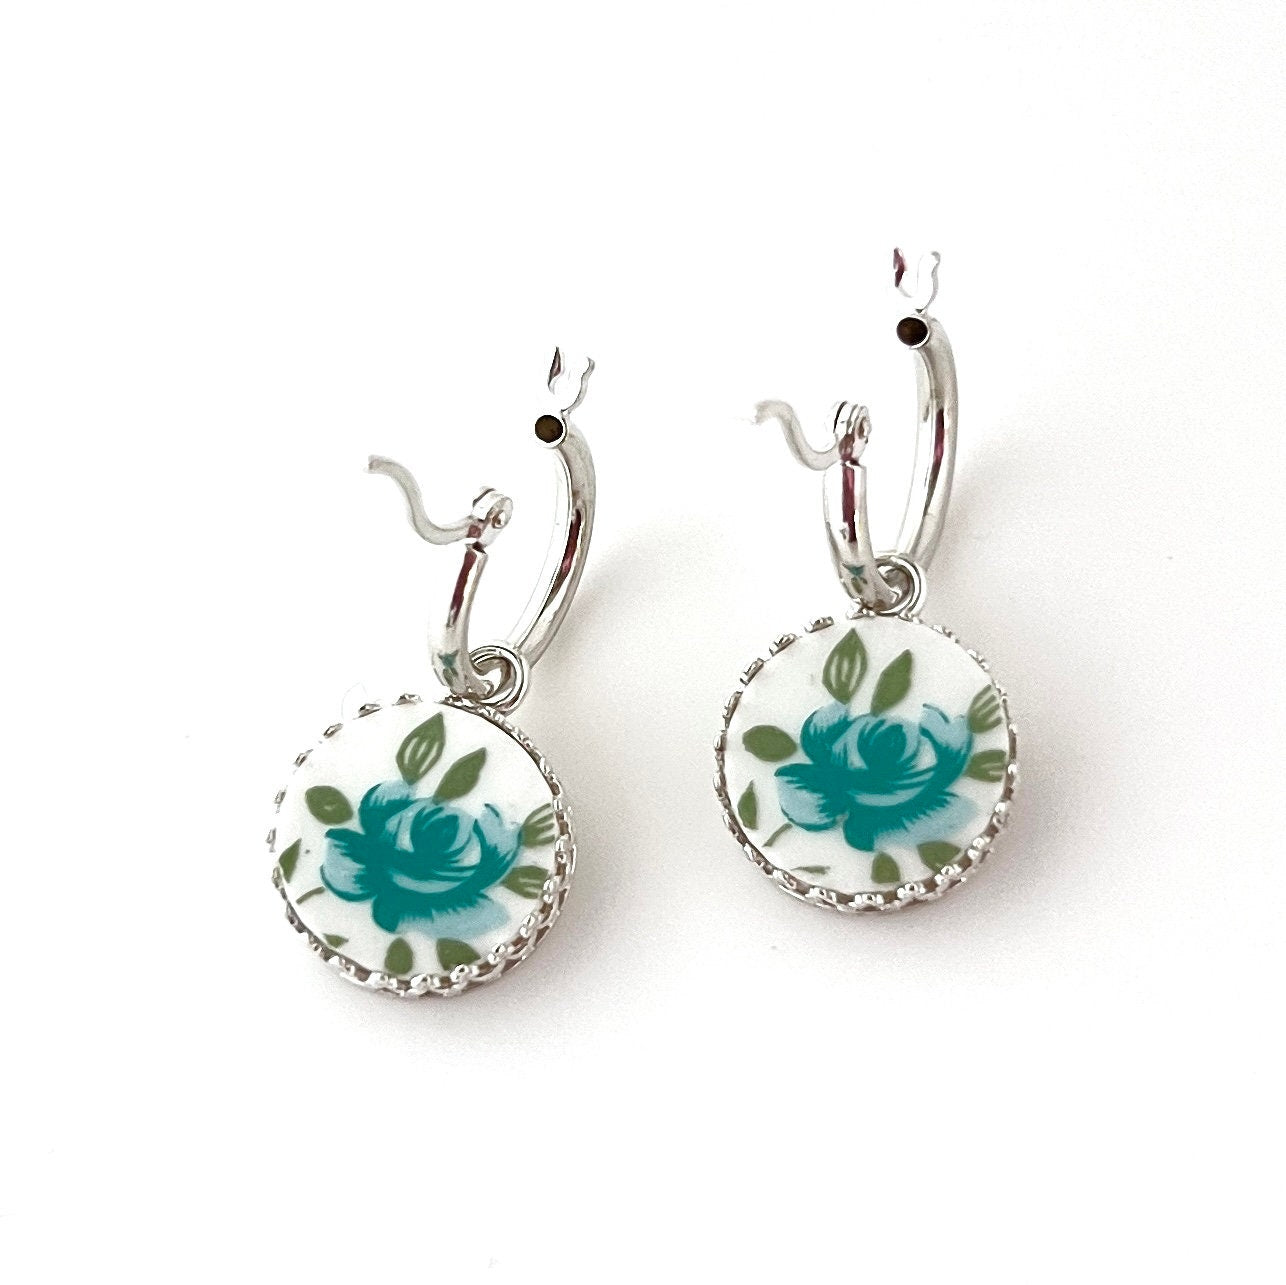 Aqua Blue Rose Earrings, Broken China Jewelry, Sterling Silver Hoop Earrings